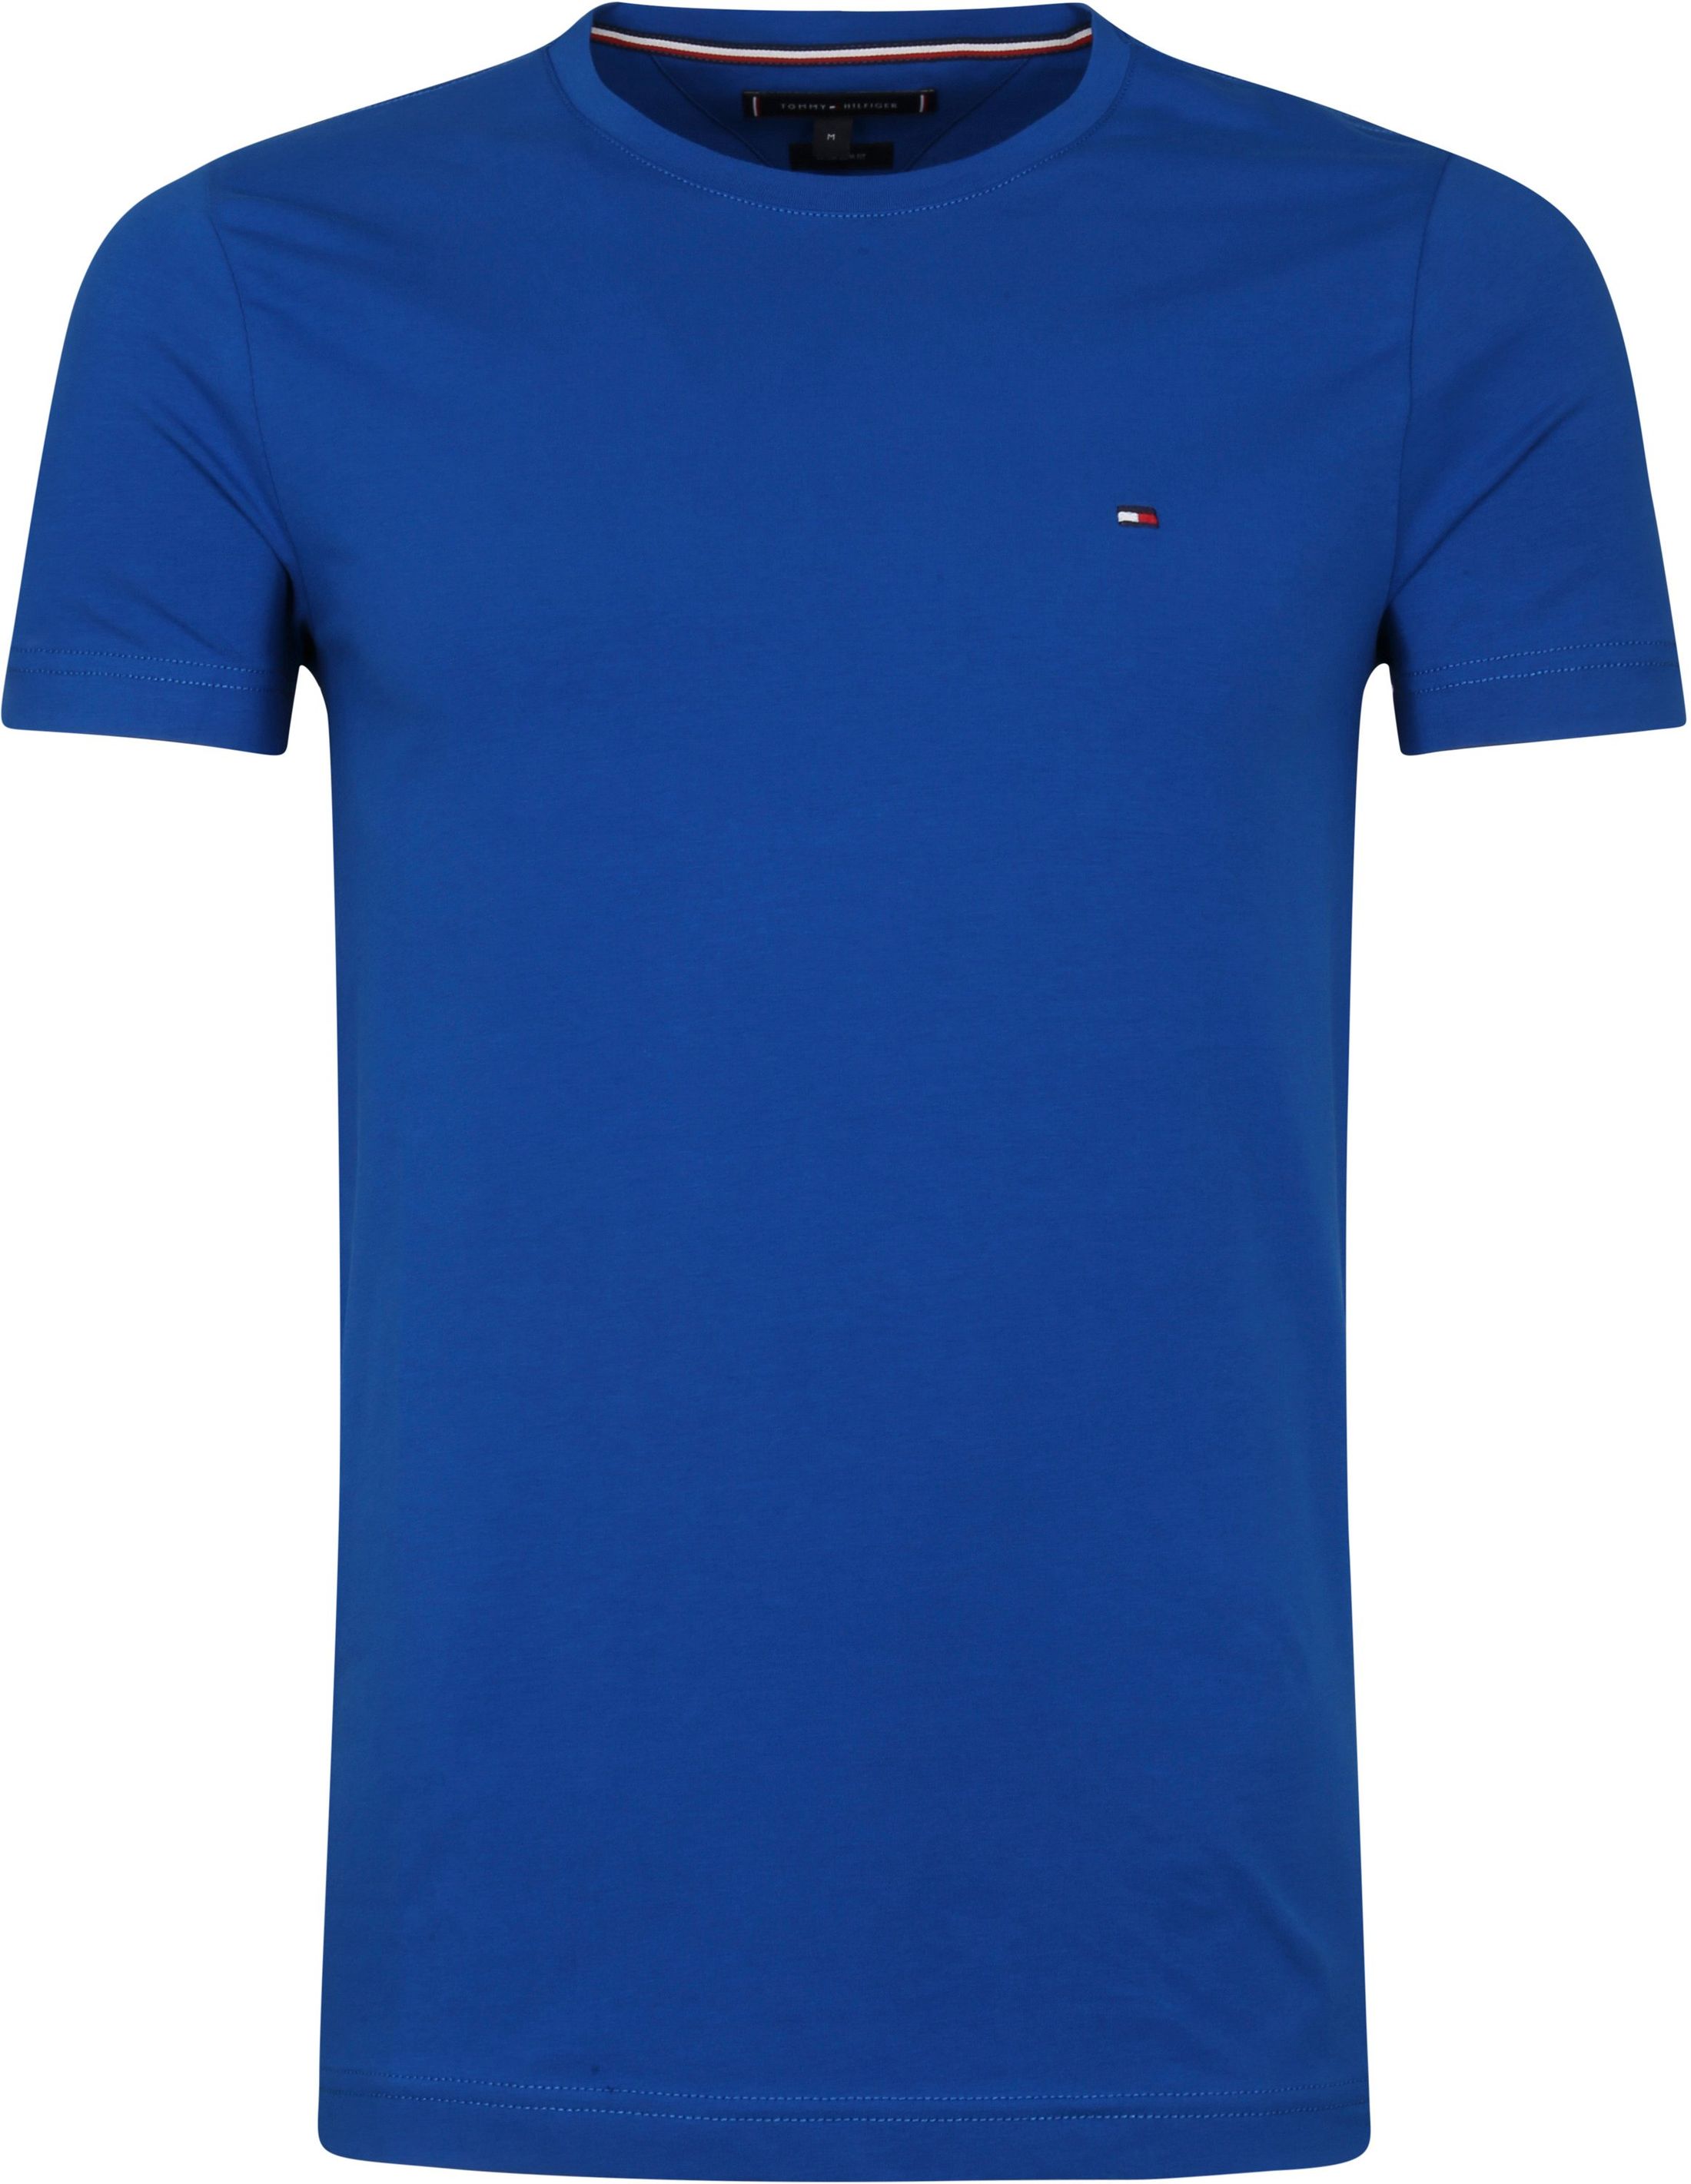 Tommy Hilfiger T-shirt Stretch Mid Blue size L